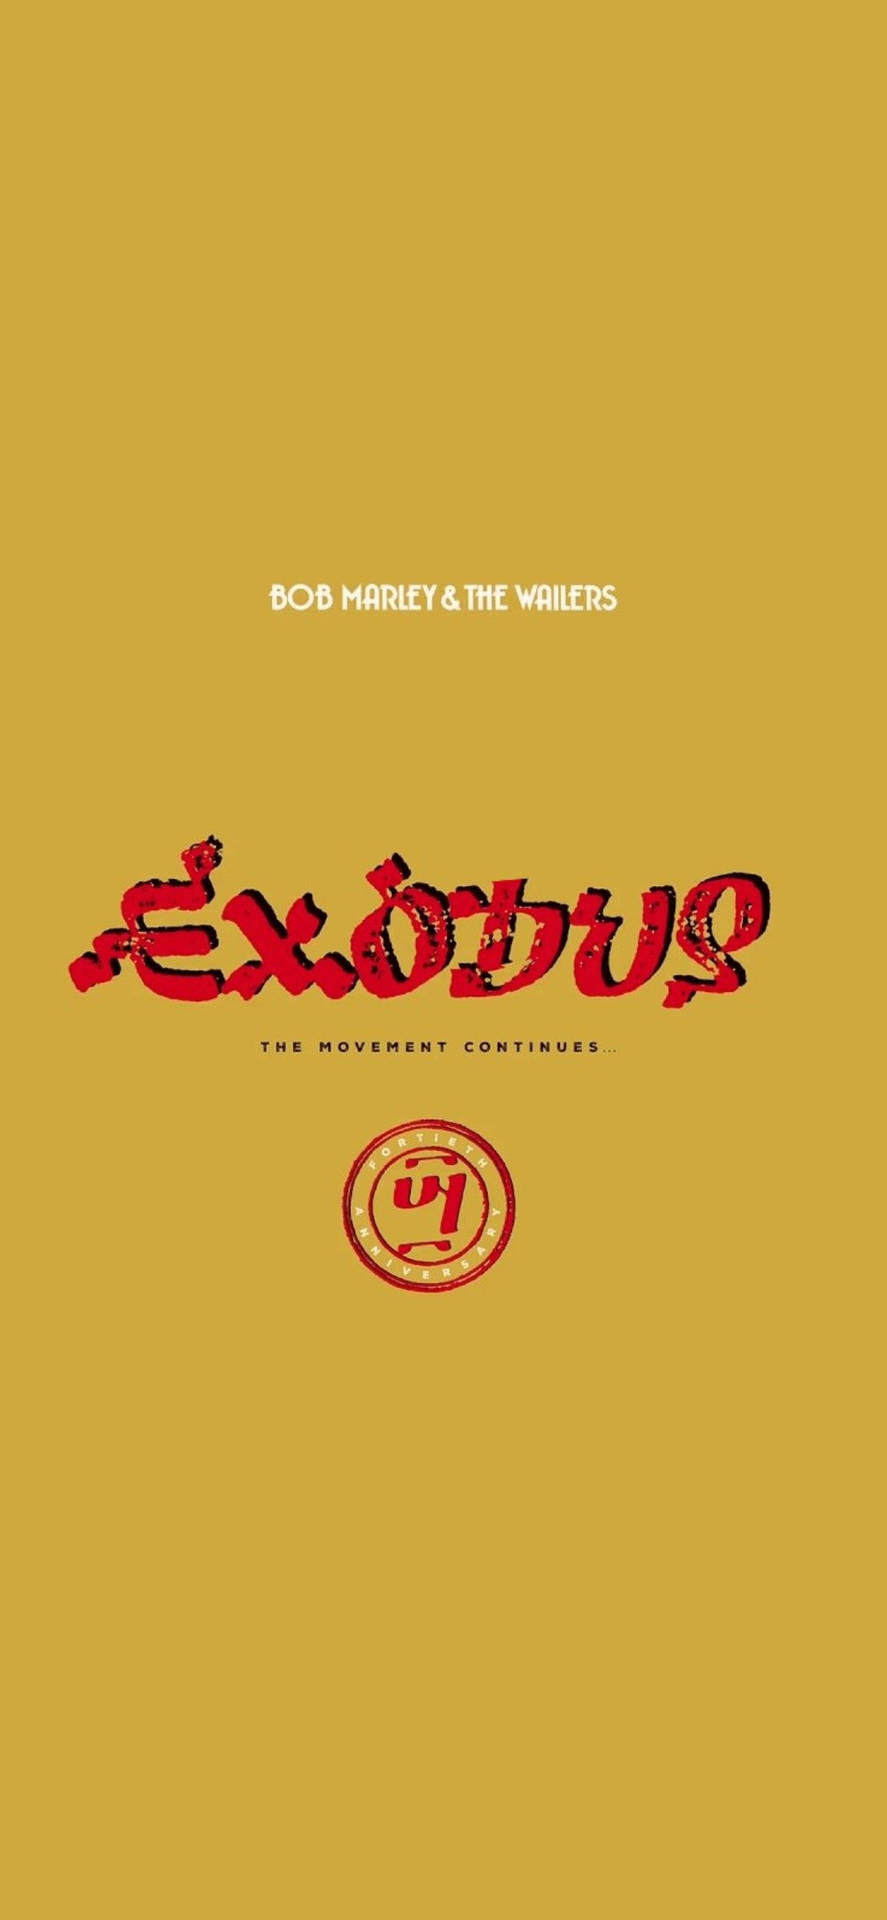 Bobmarley Och The Wailers Exodus Album Wallpaper